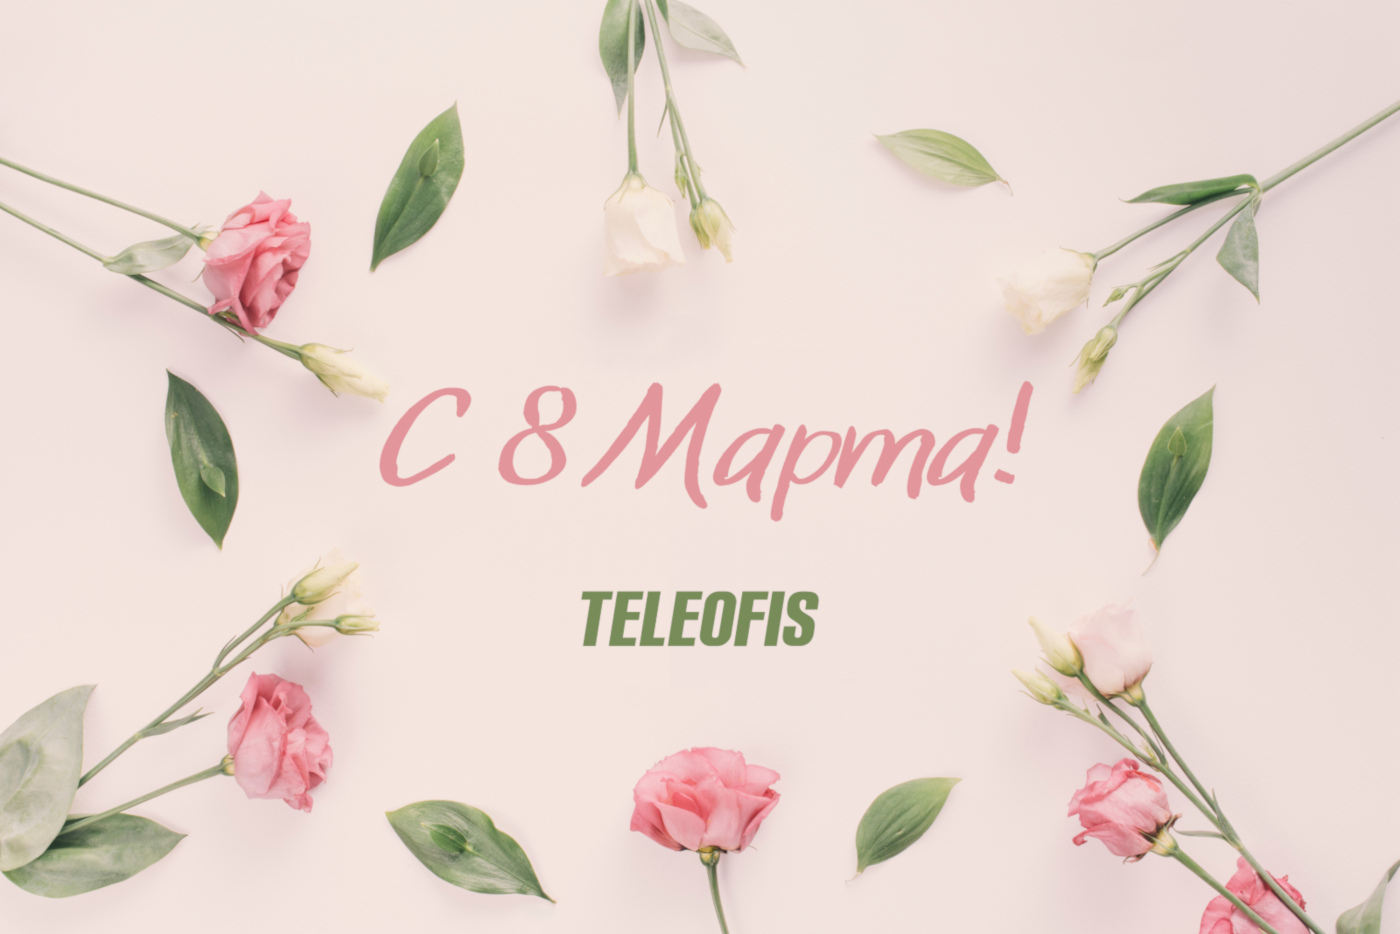 teleofis-8-march-2021